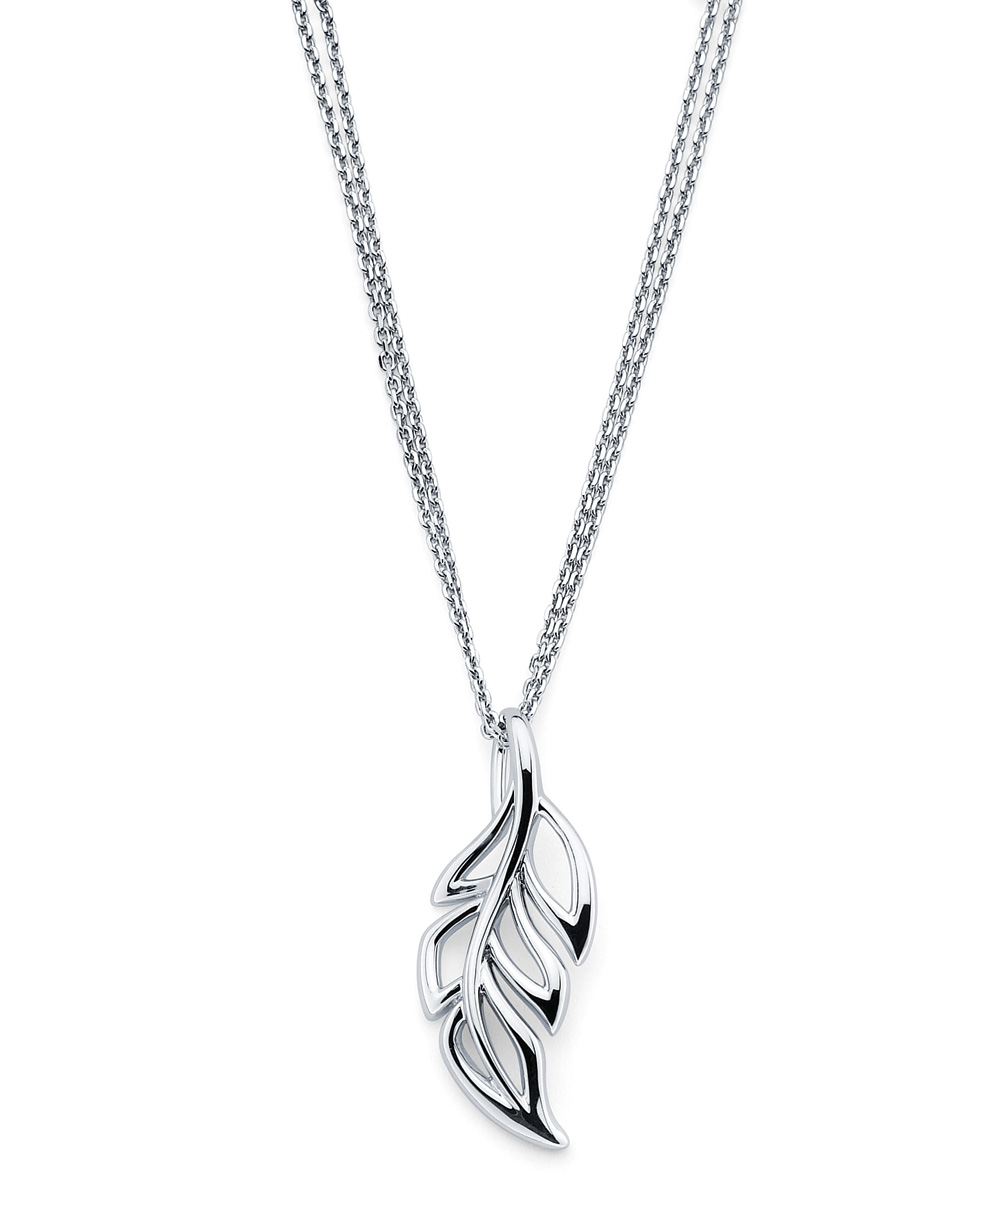 ... sterling silver pendant necklace. zoom WSJAZCA